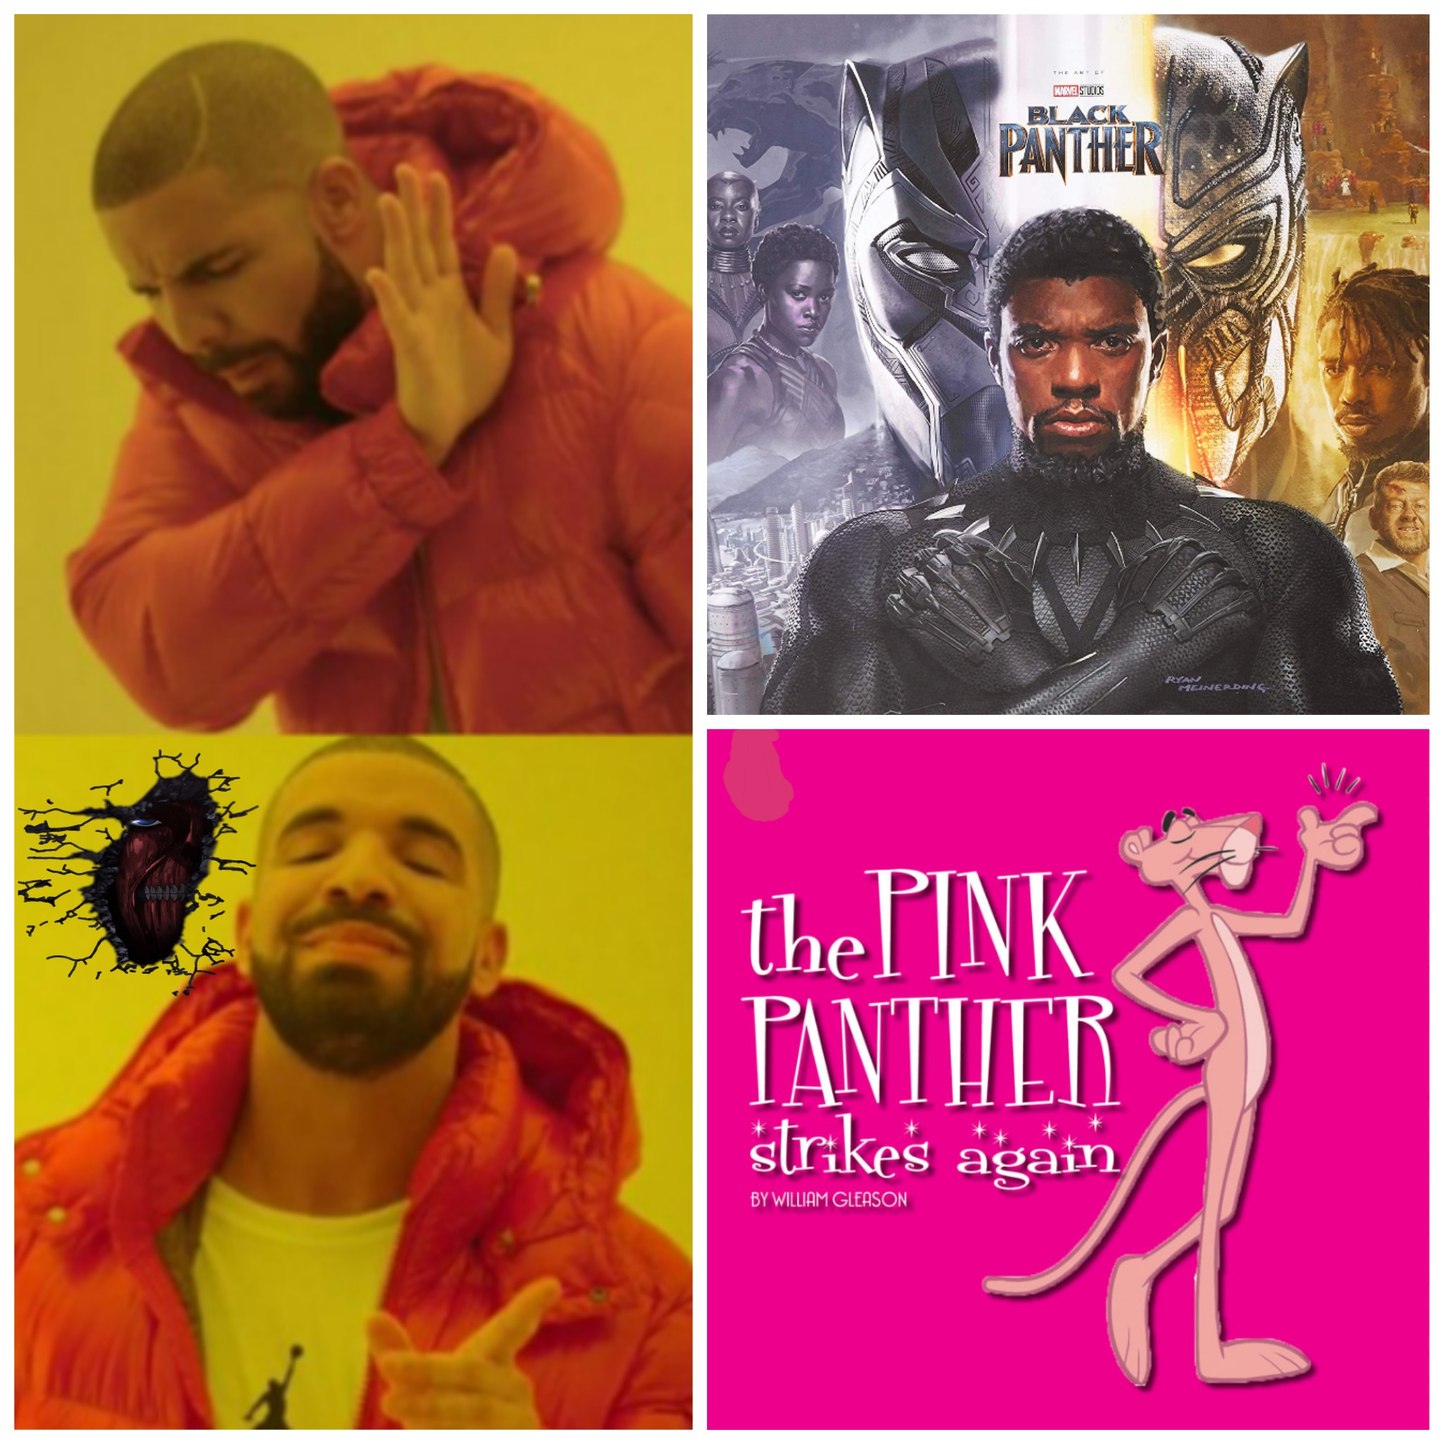 La mejor banda sonora (pantera rosa). - meme